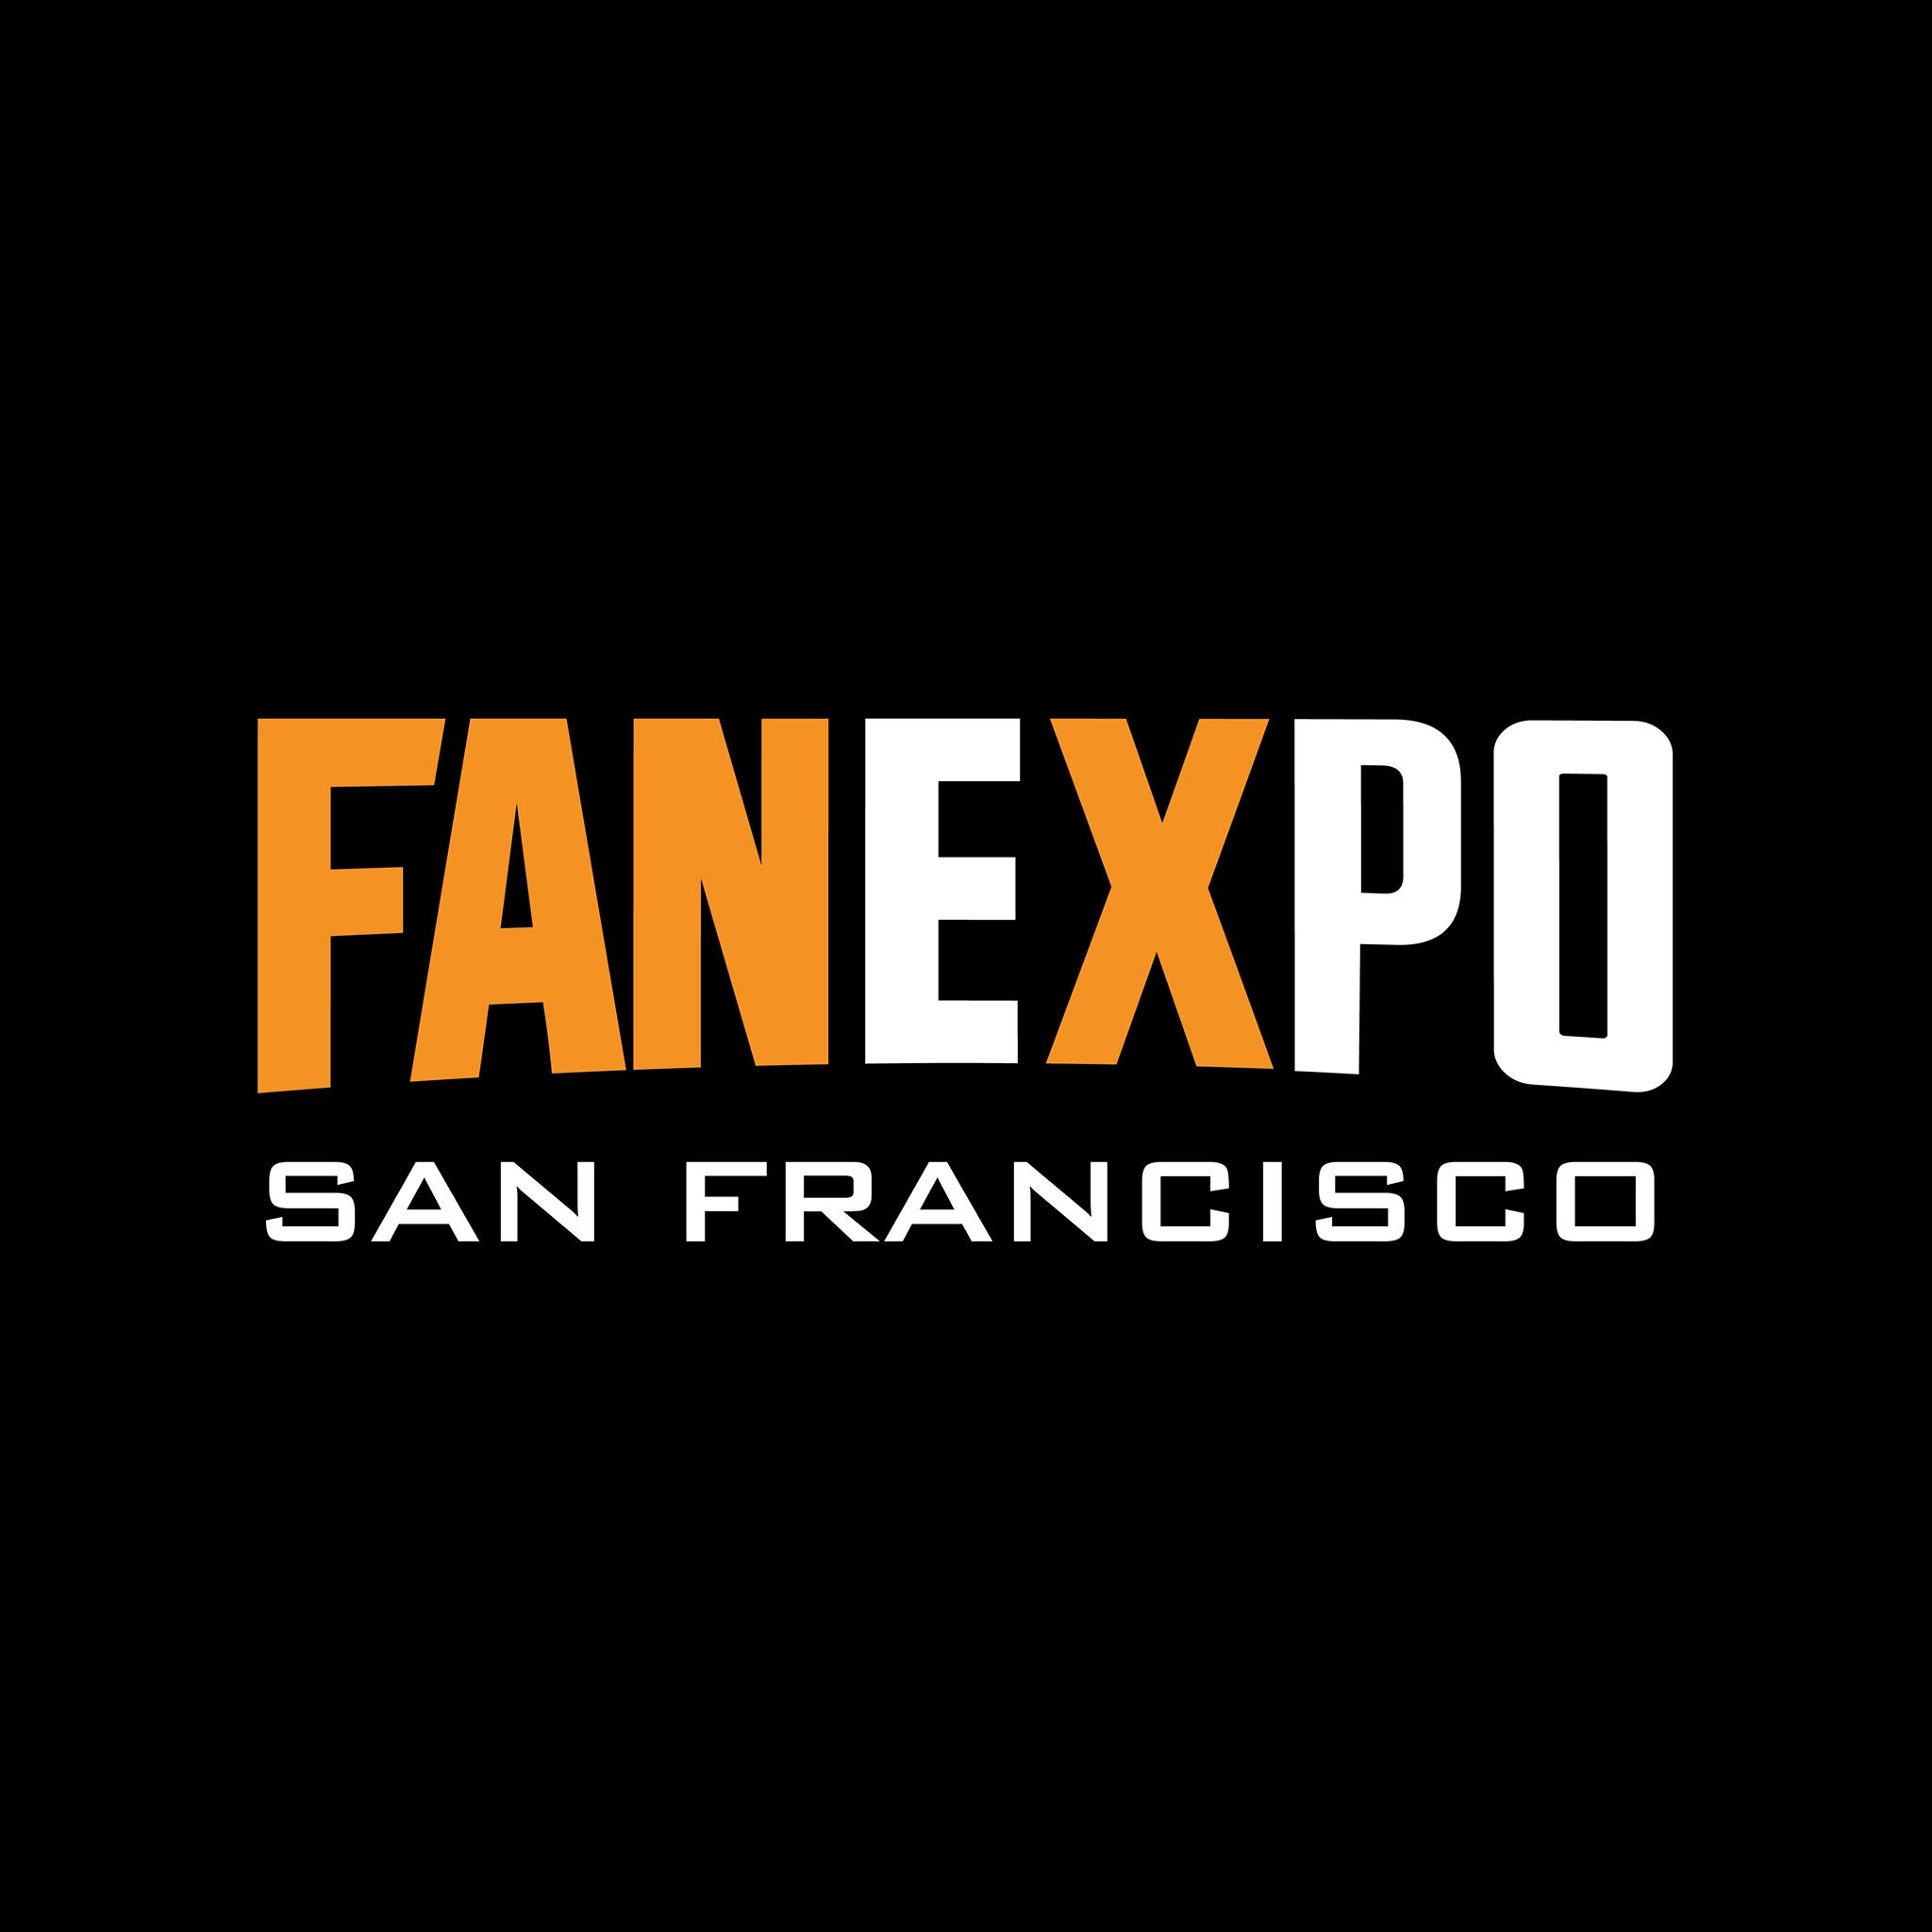 FAN EXPO San Francisco